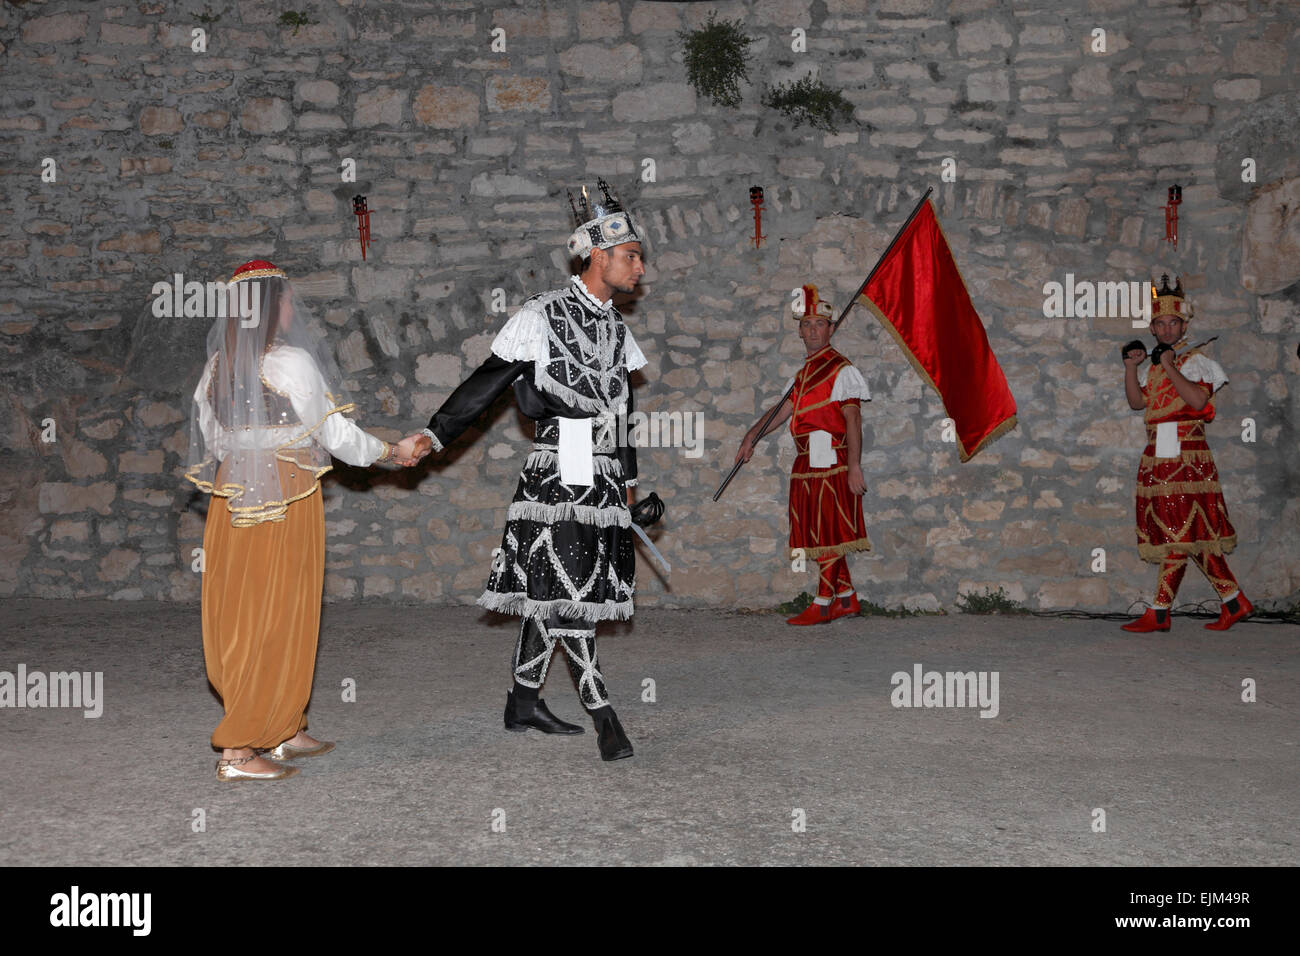 The Moreska Traditional Korkula Croatia Sword Dance Folk dance tradition the expulsion of the Islamic Moors from the island Stock Photo